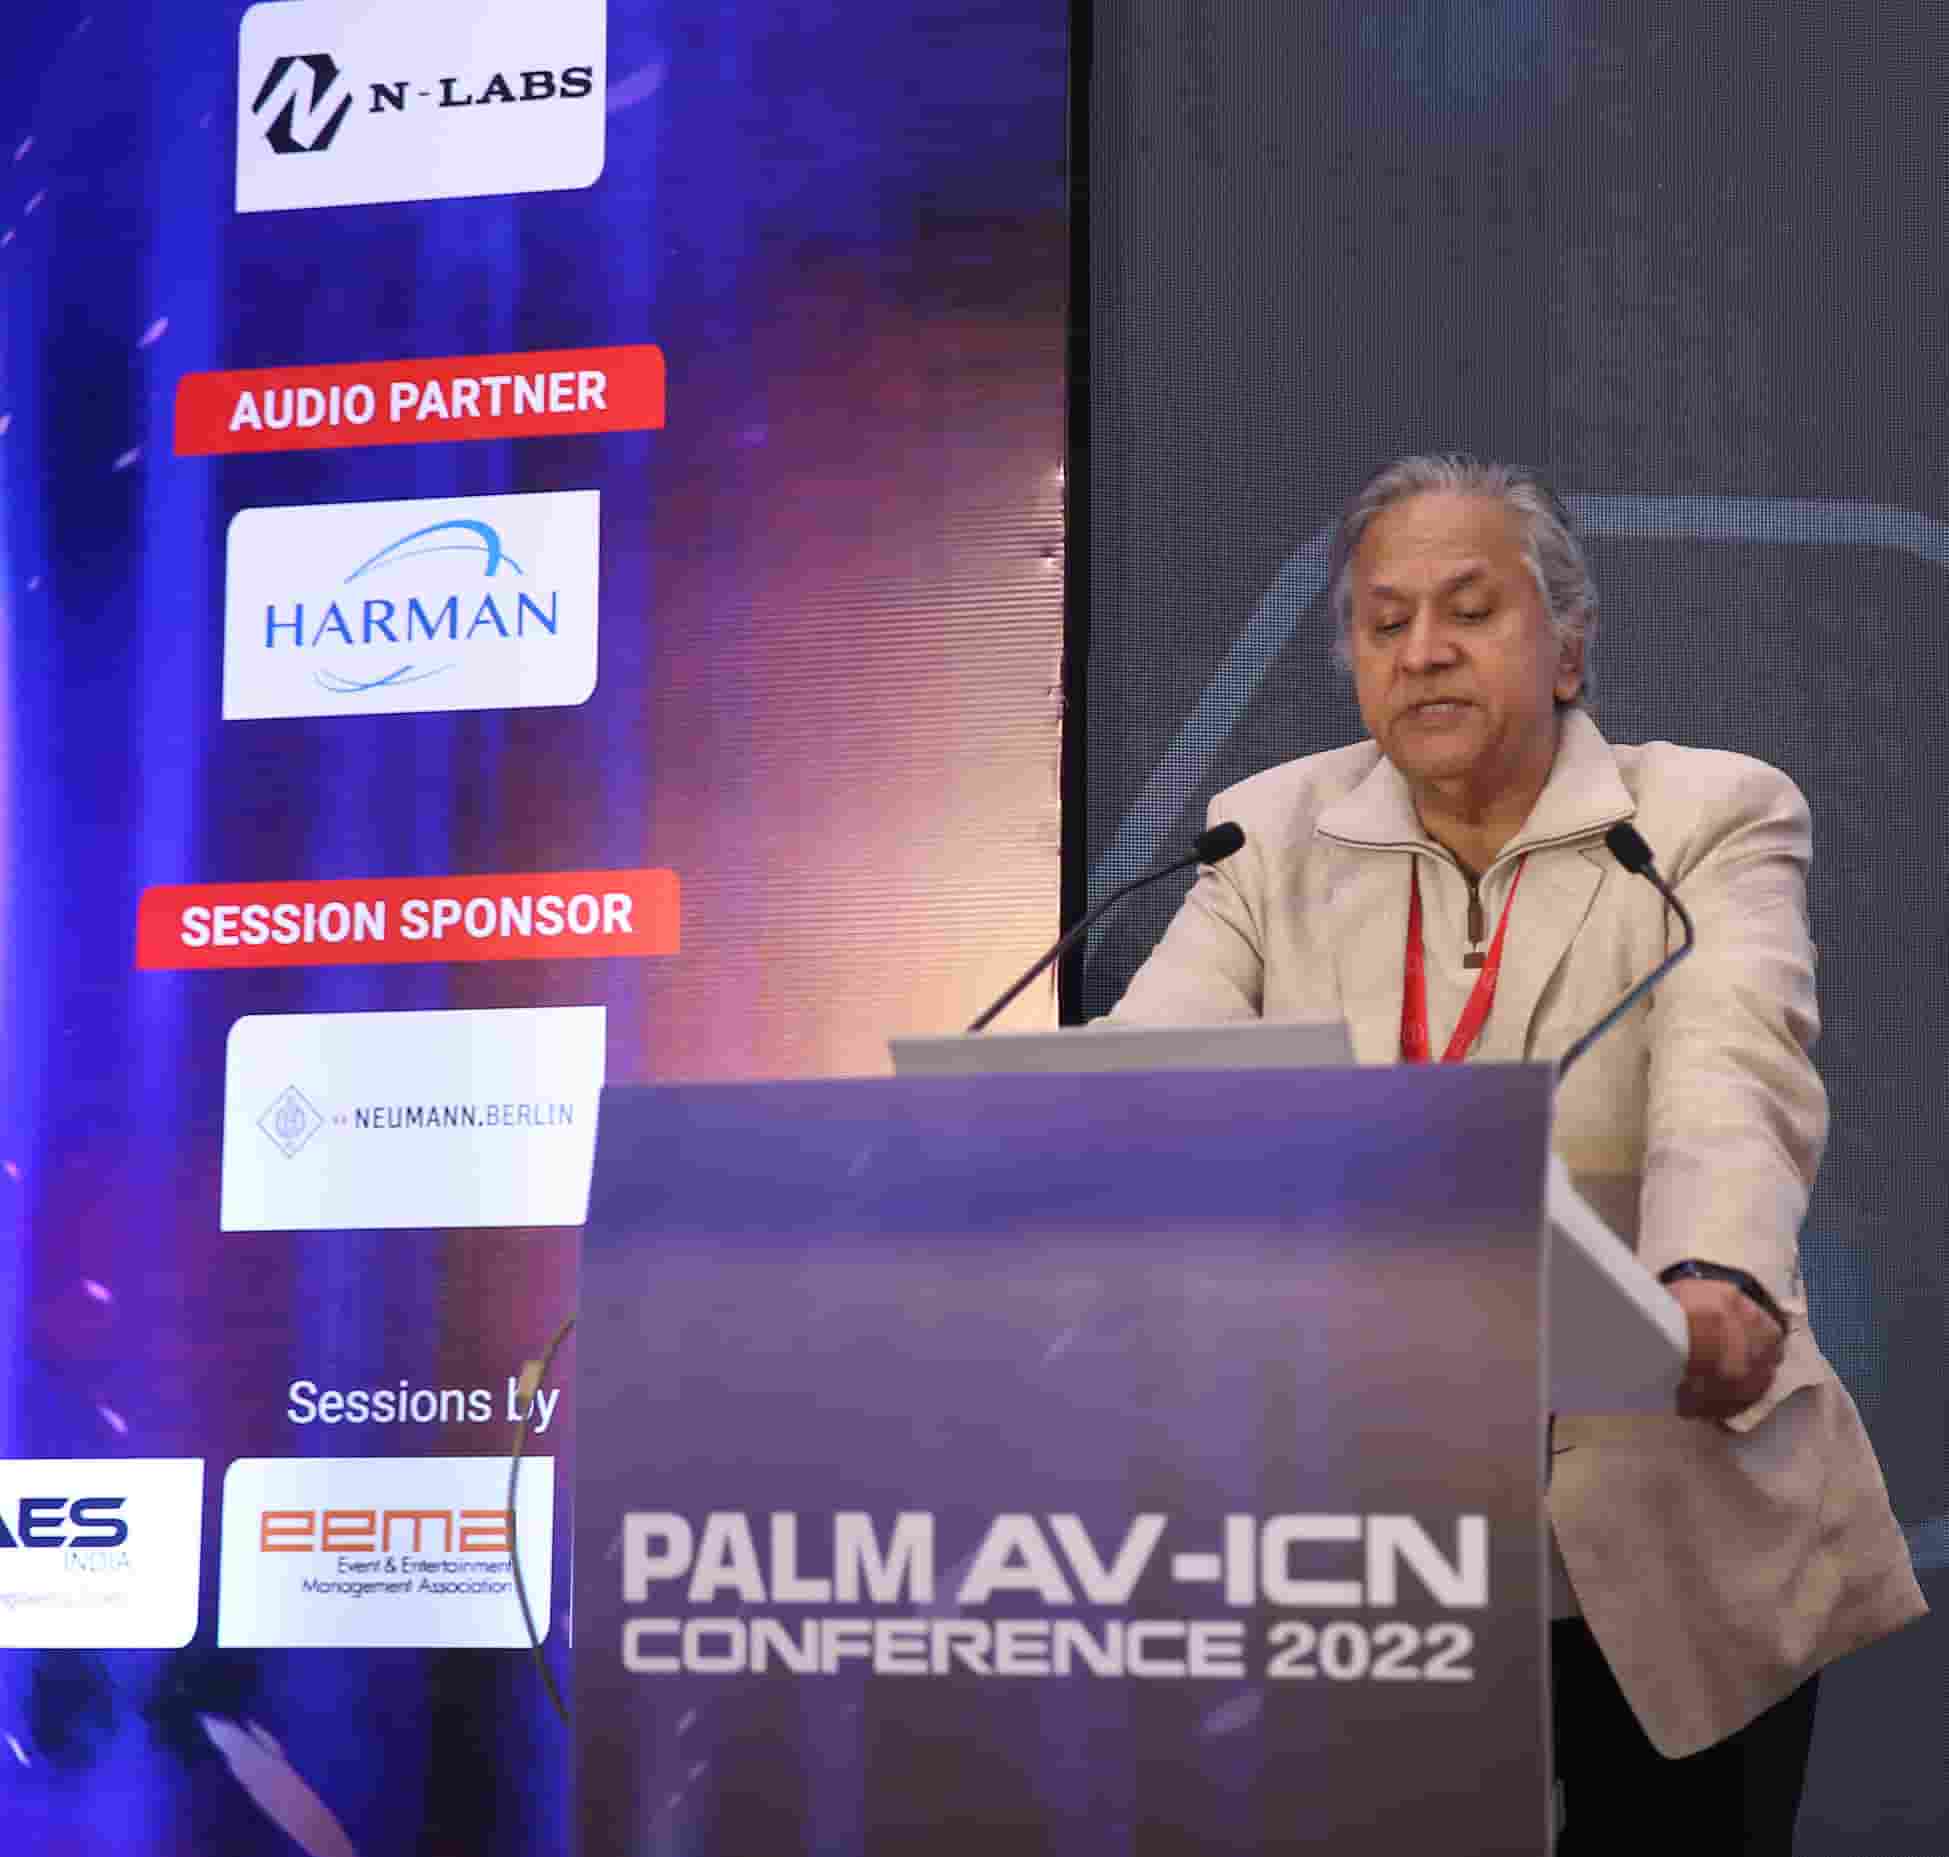 Anil Chopra, Founding Director - PALM AV-ICN Conference